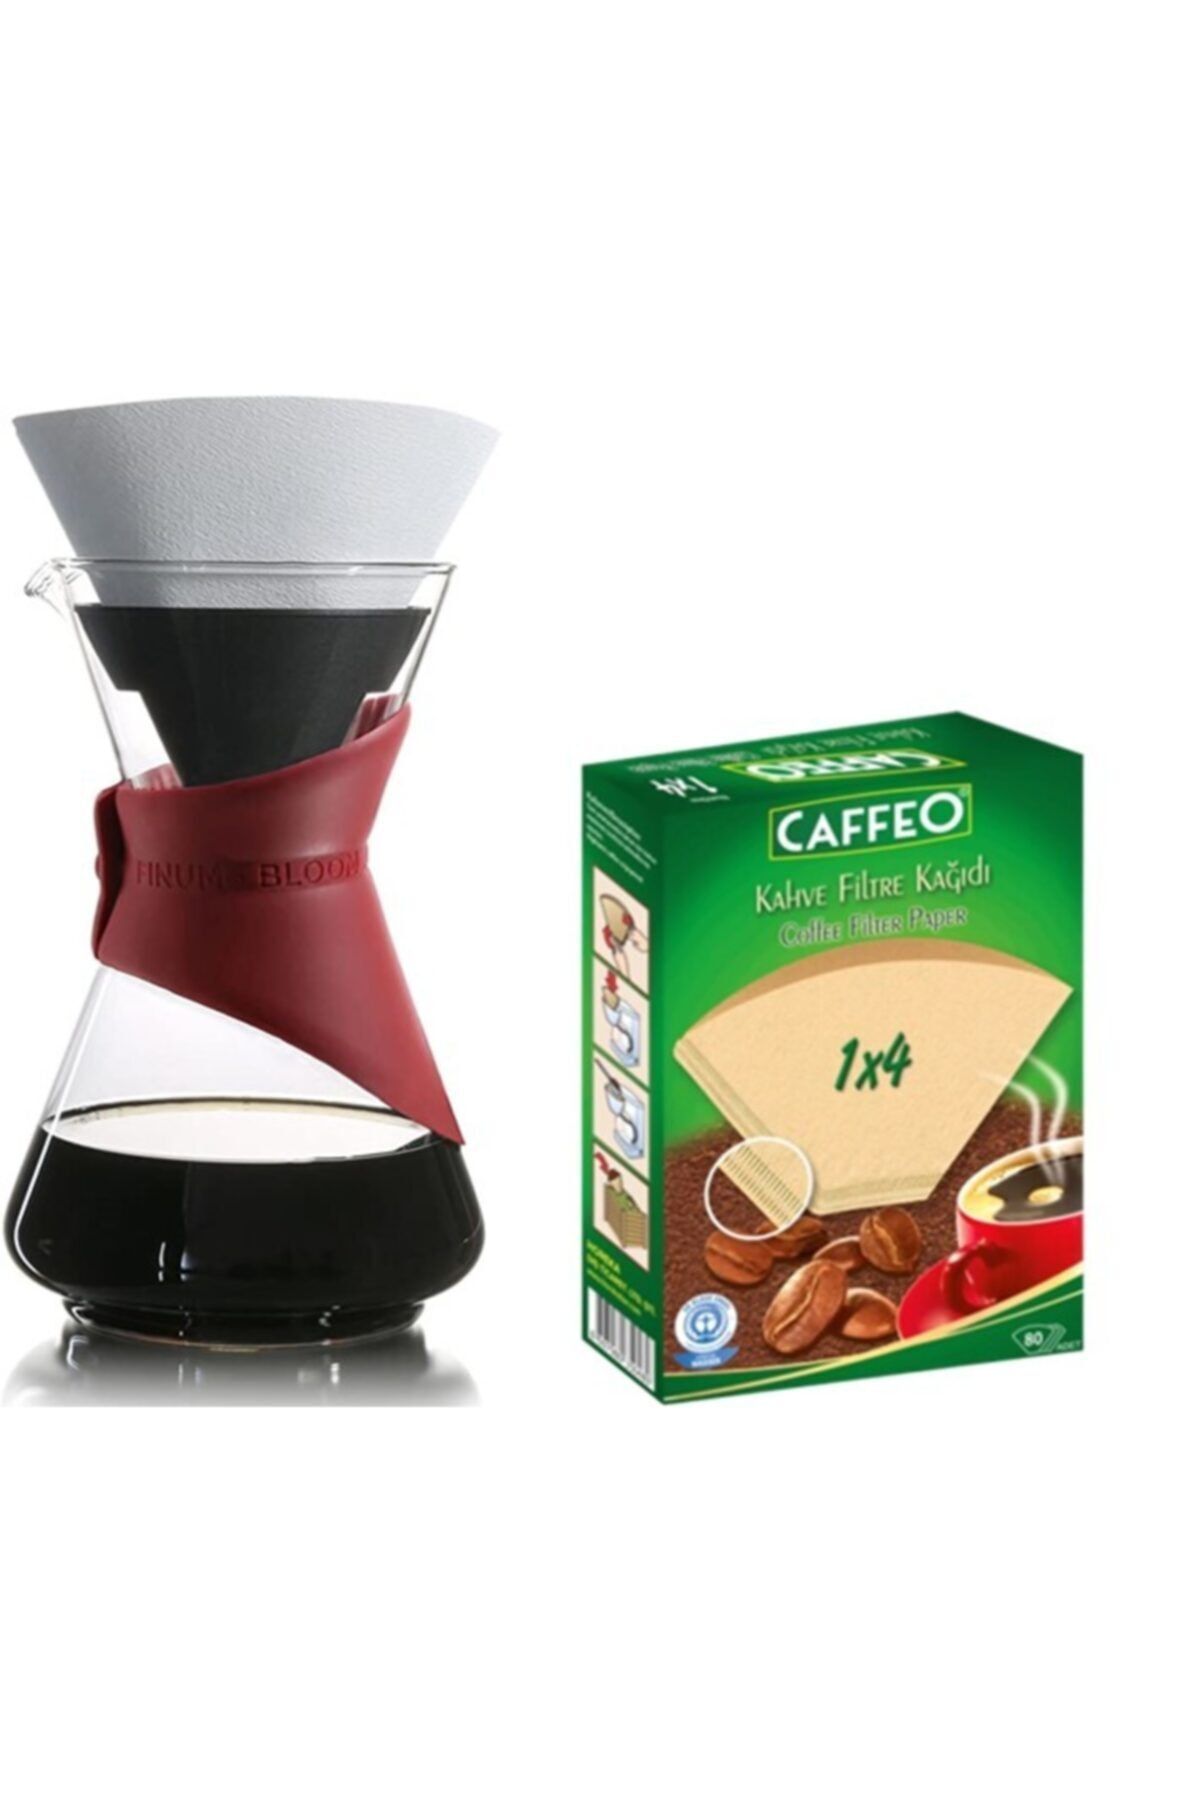 Caffeo Kafiltro Chemex Bloom And Flow Filtre Kahve Sürahisi 2-5 Fincan Demleme